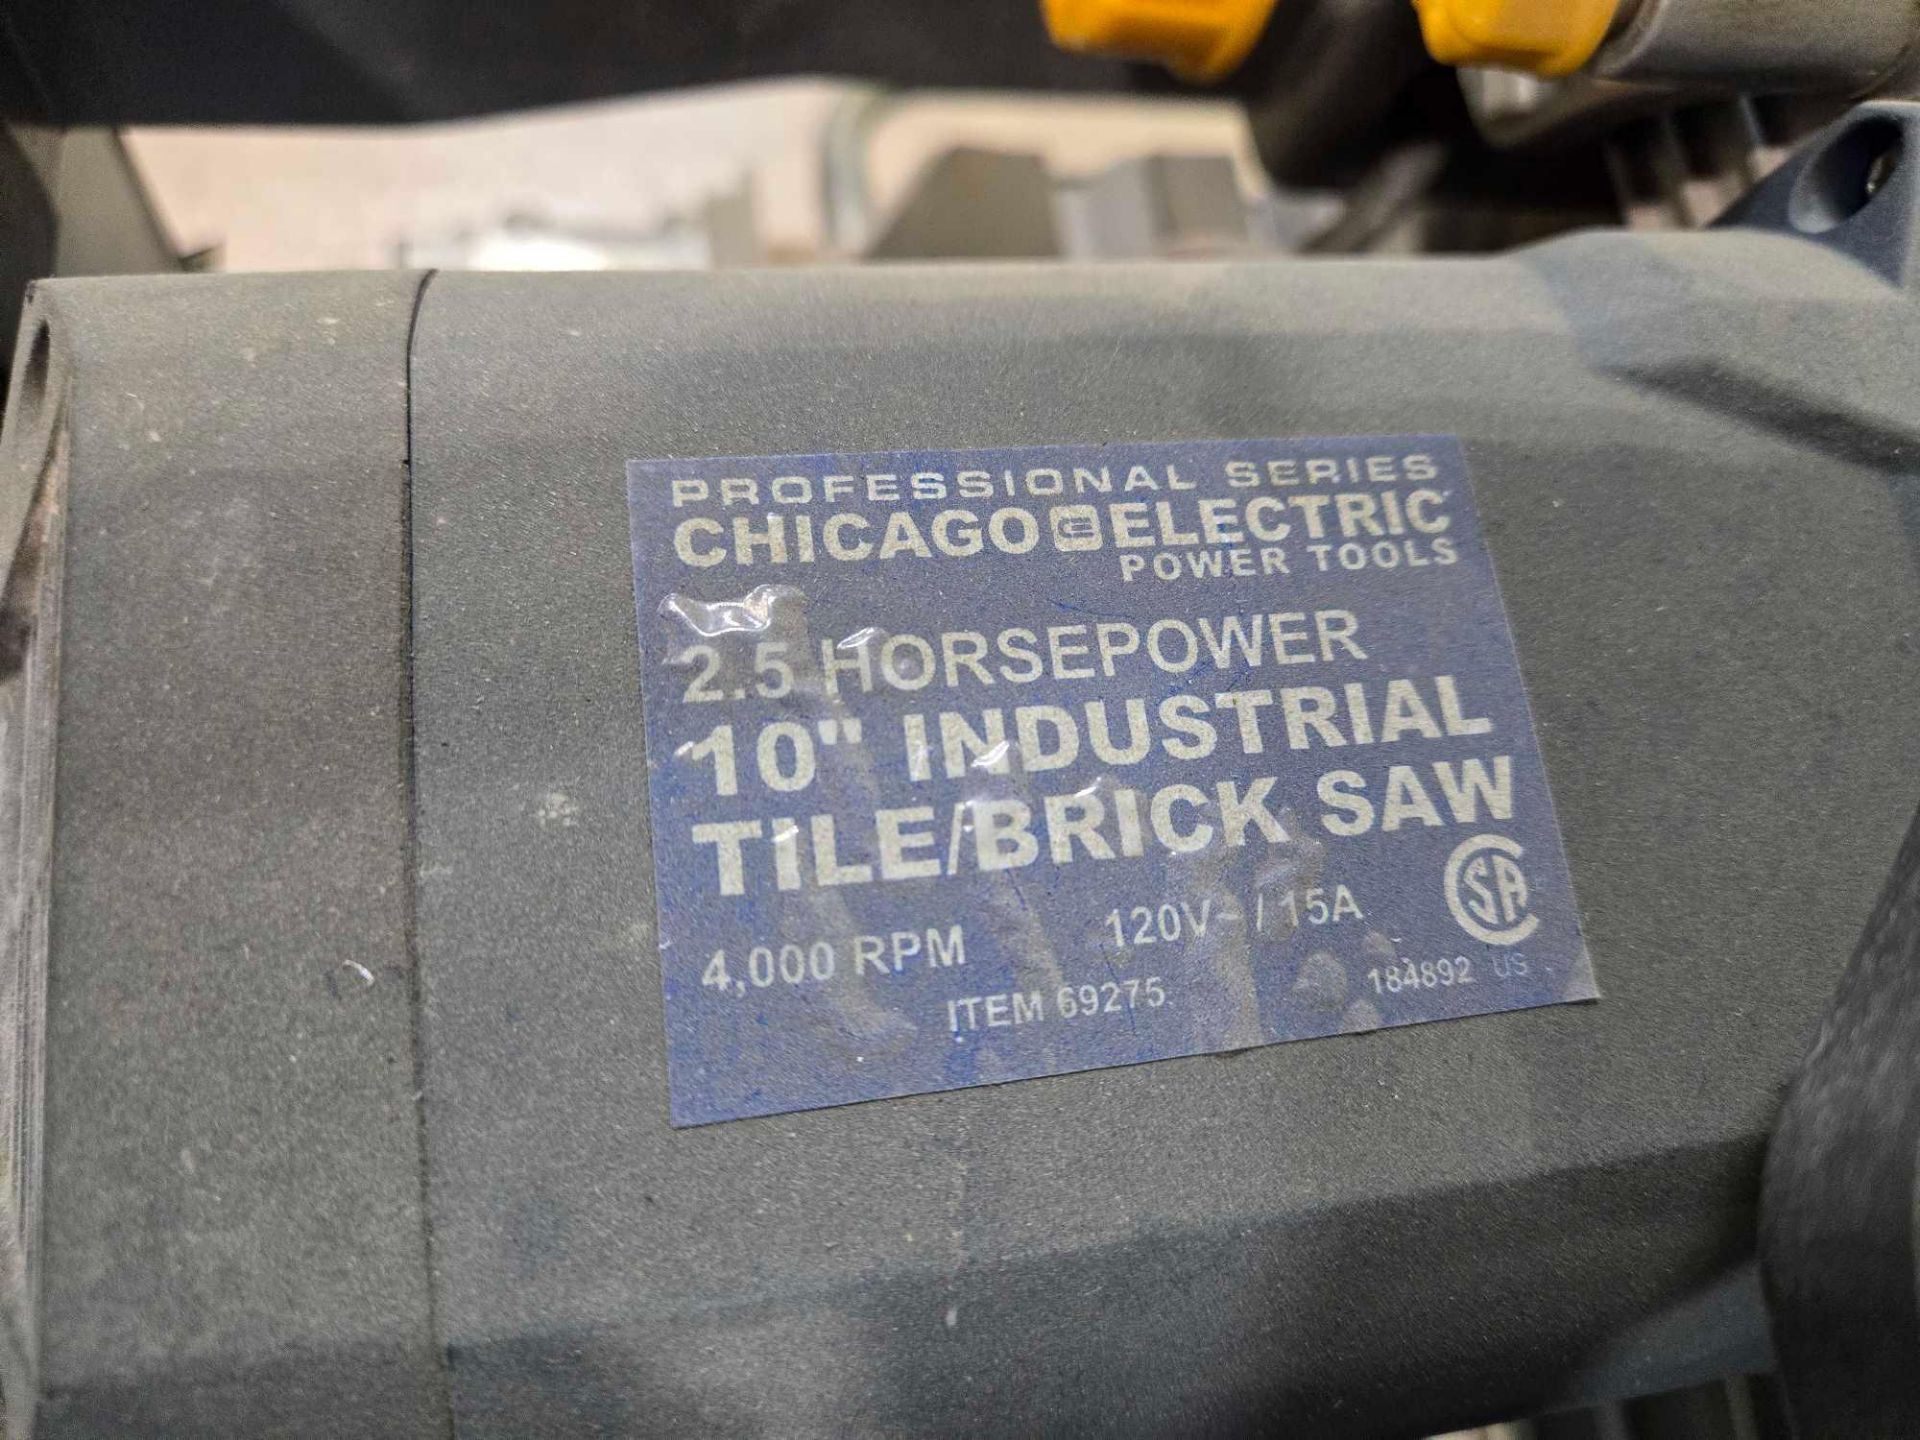 PROFESSIONAL SERIES CHICAGO ELECTRIC 2.5HP 10” INDUSTRIAL TILE/BRICK SAW - Bild 9 aus 9